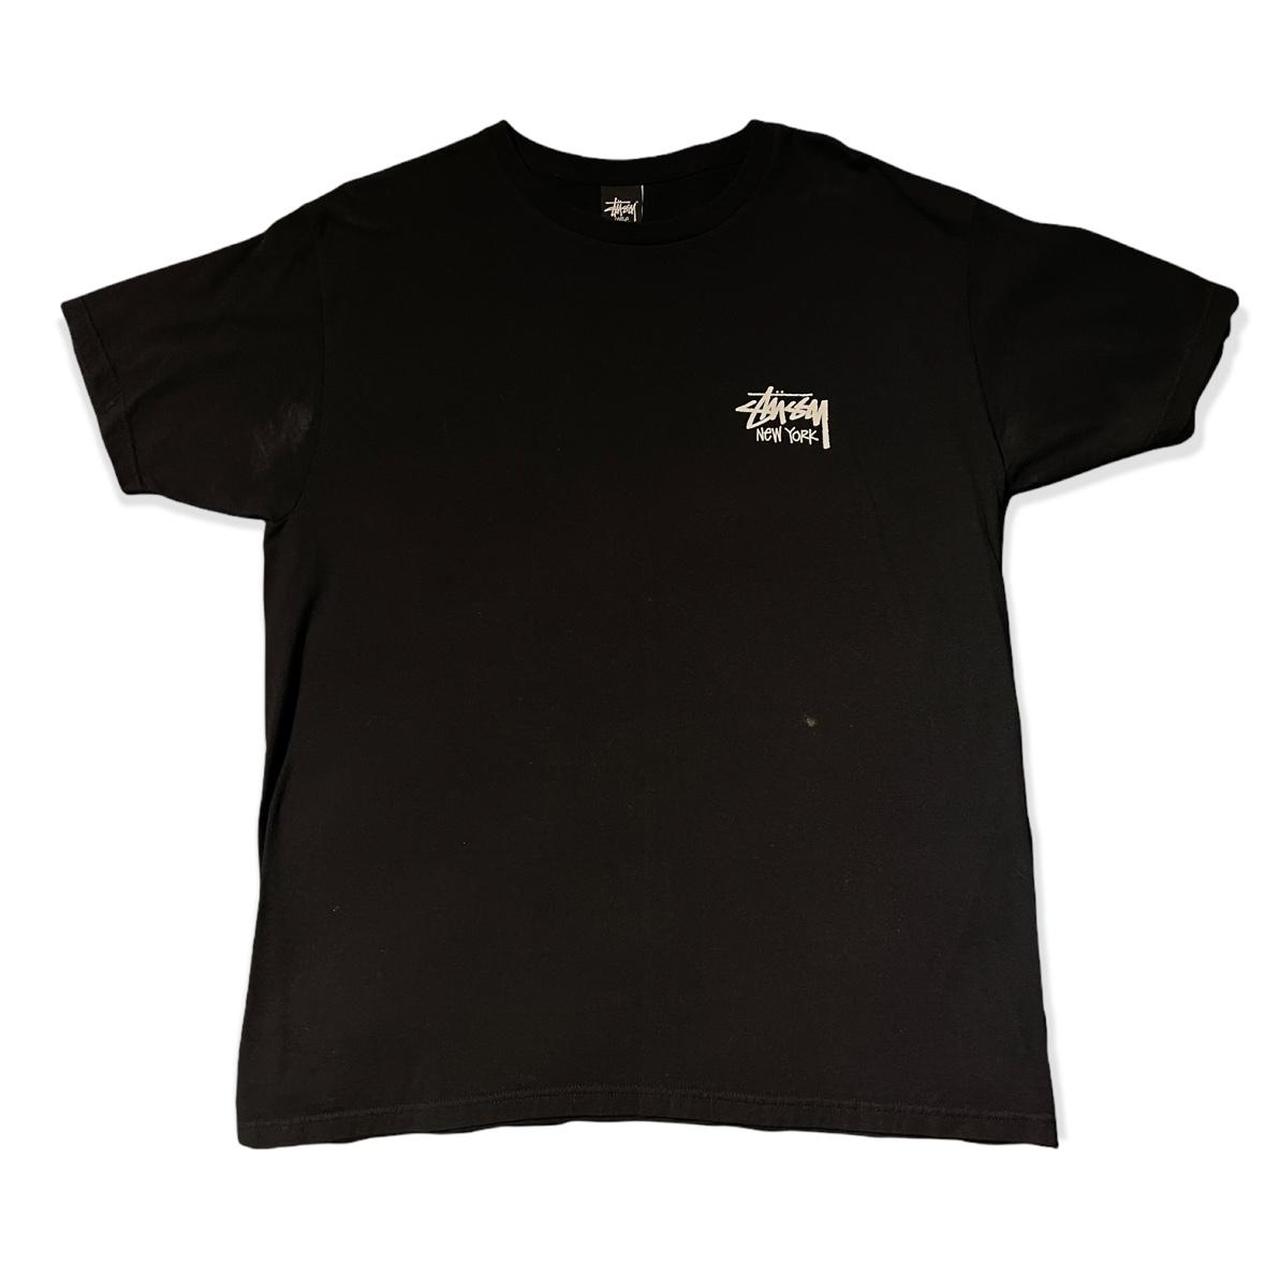 Stussy New York t-shirt size large - Depop